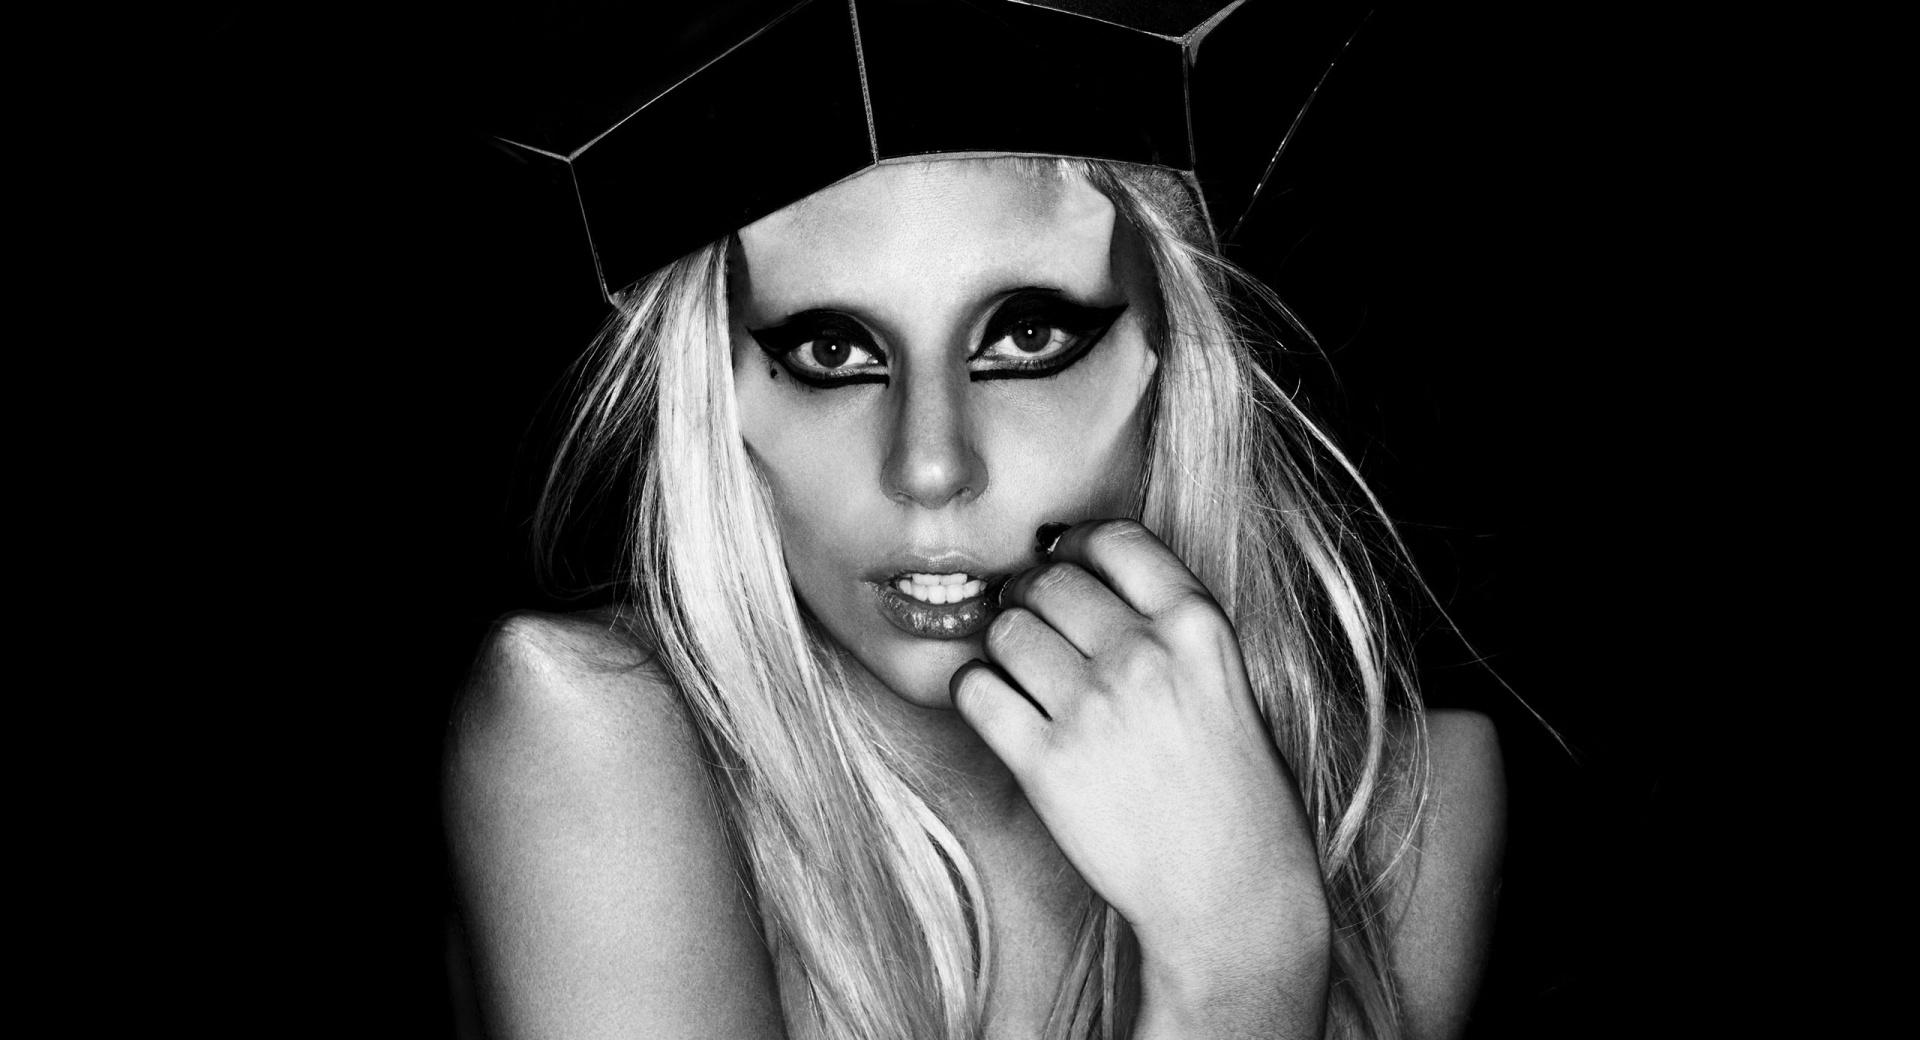 Lady Gaga - Born This Way at 2048 x 2048 iPad size wallpapers HD quality